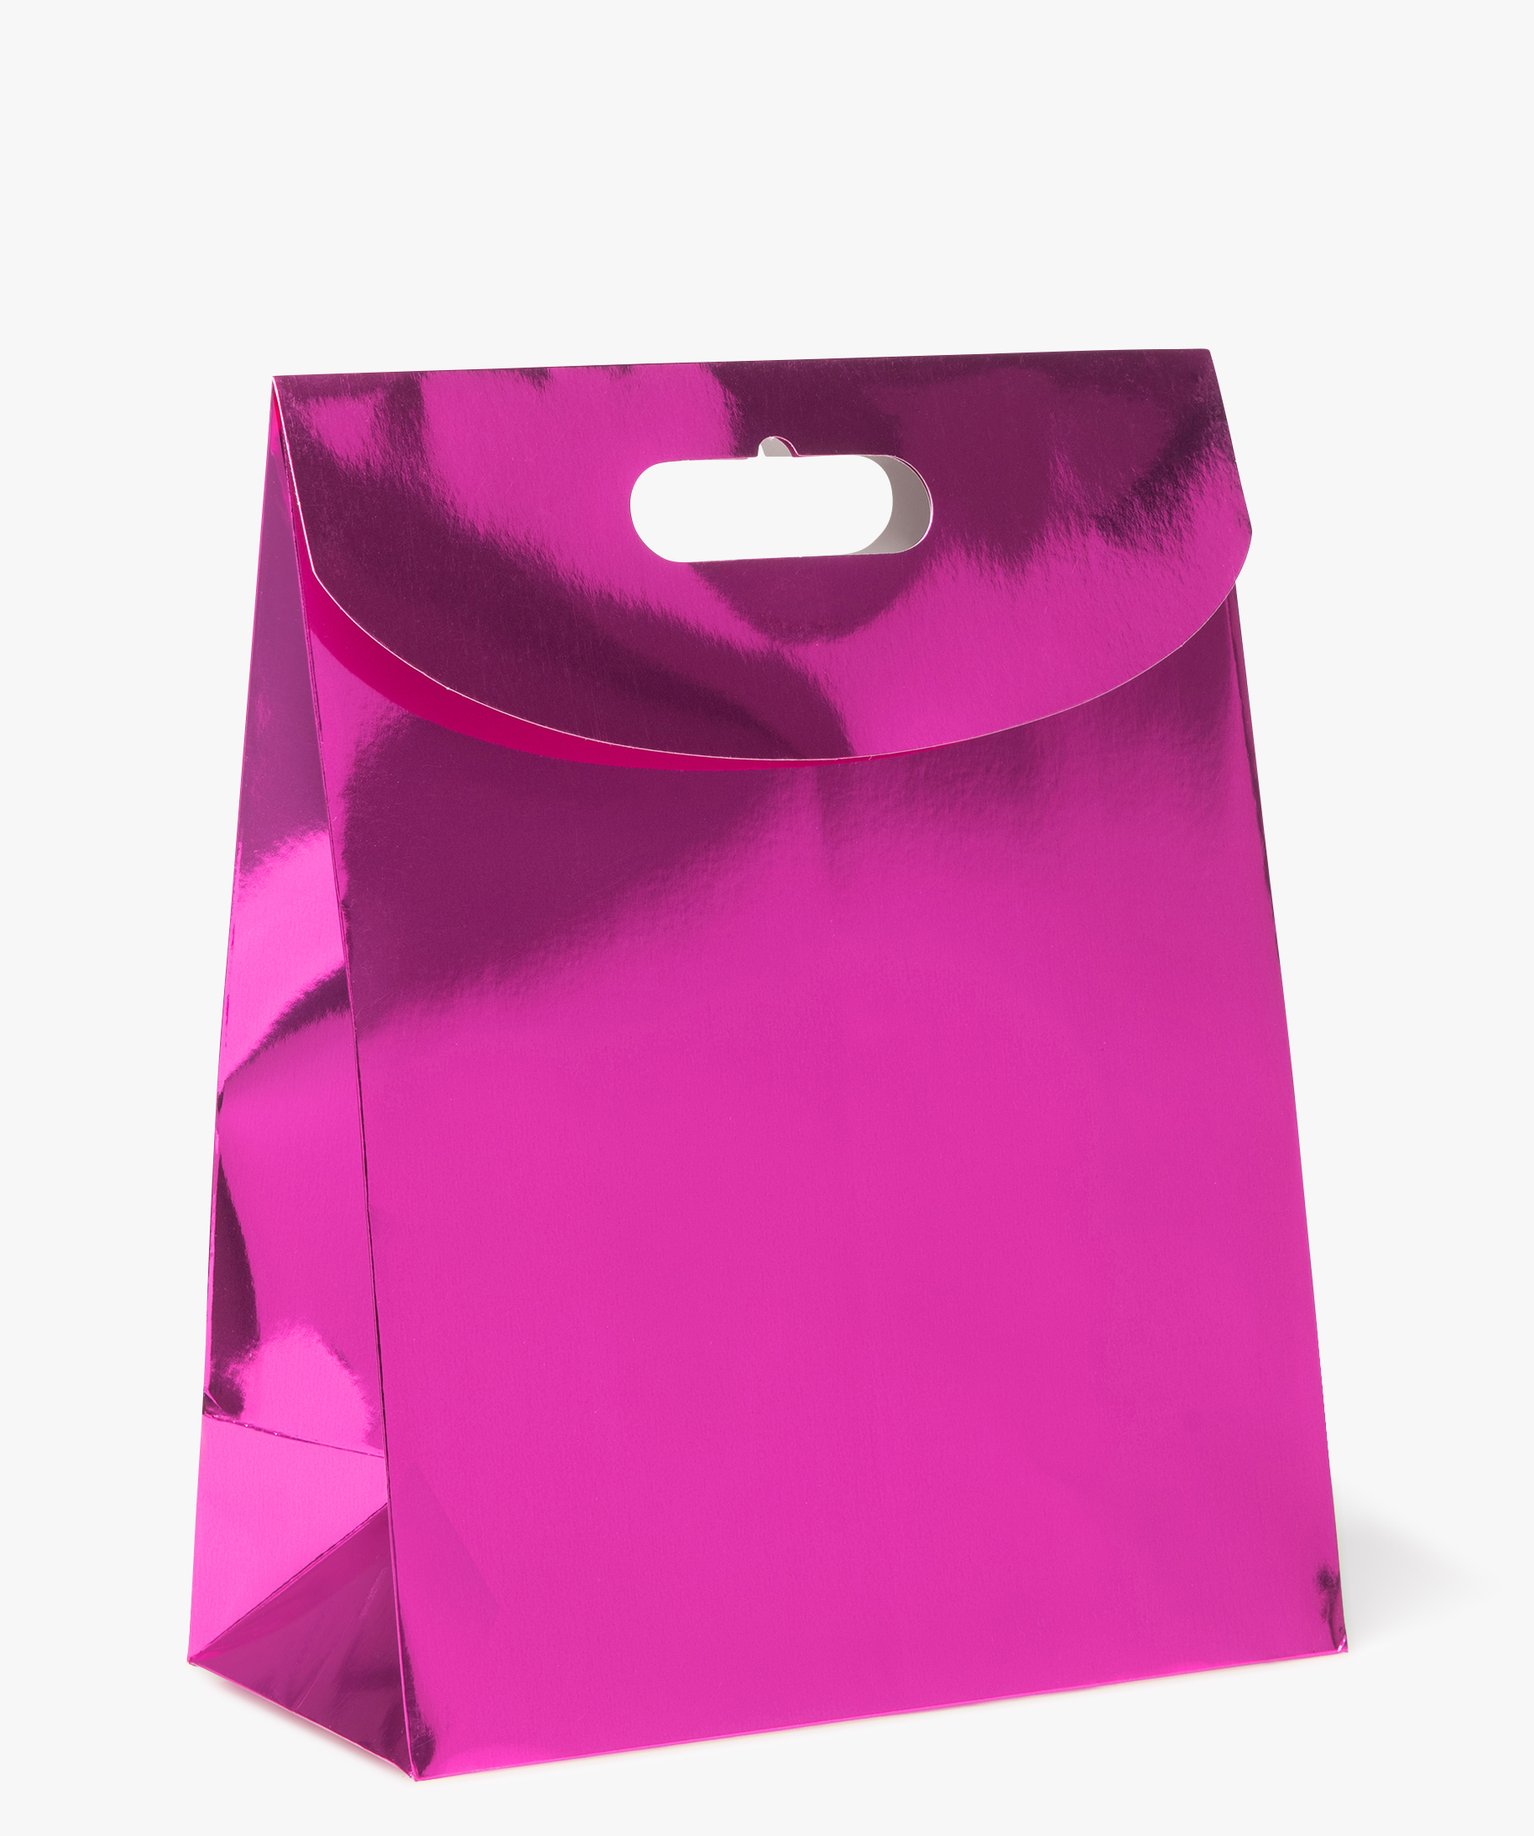 sac cadeau petit format avec rabat scratch coloris metallise rose